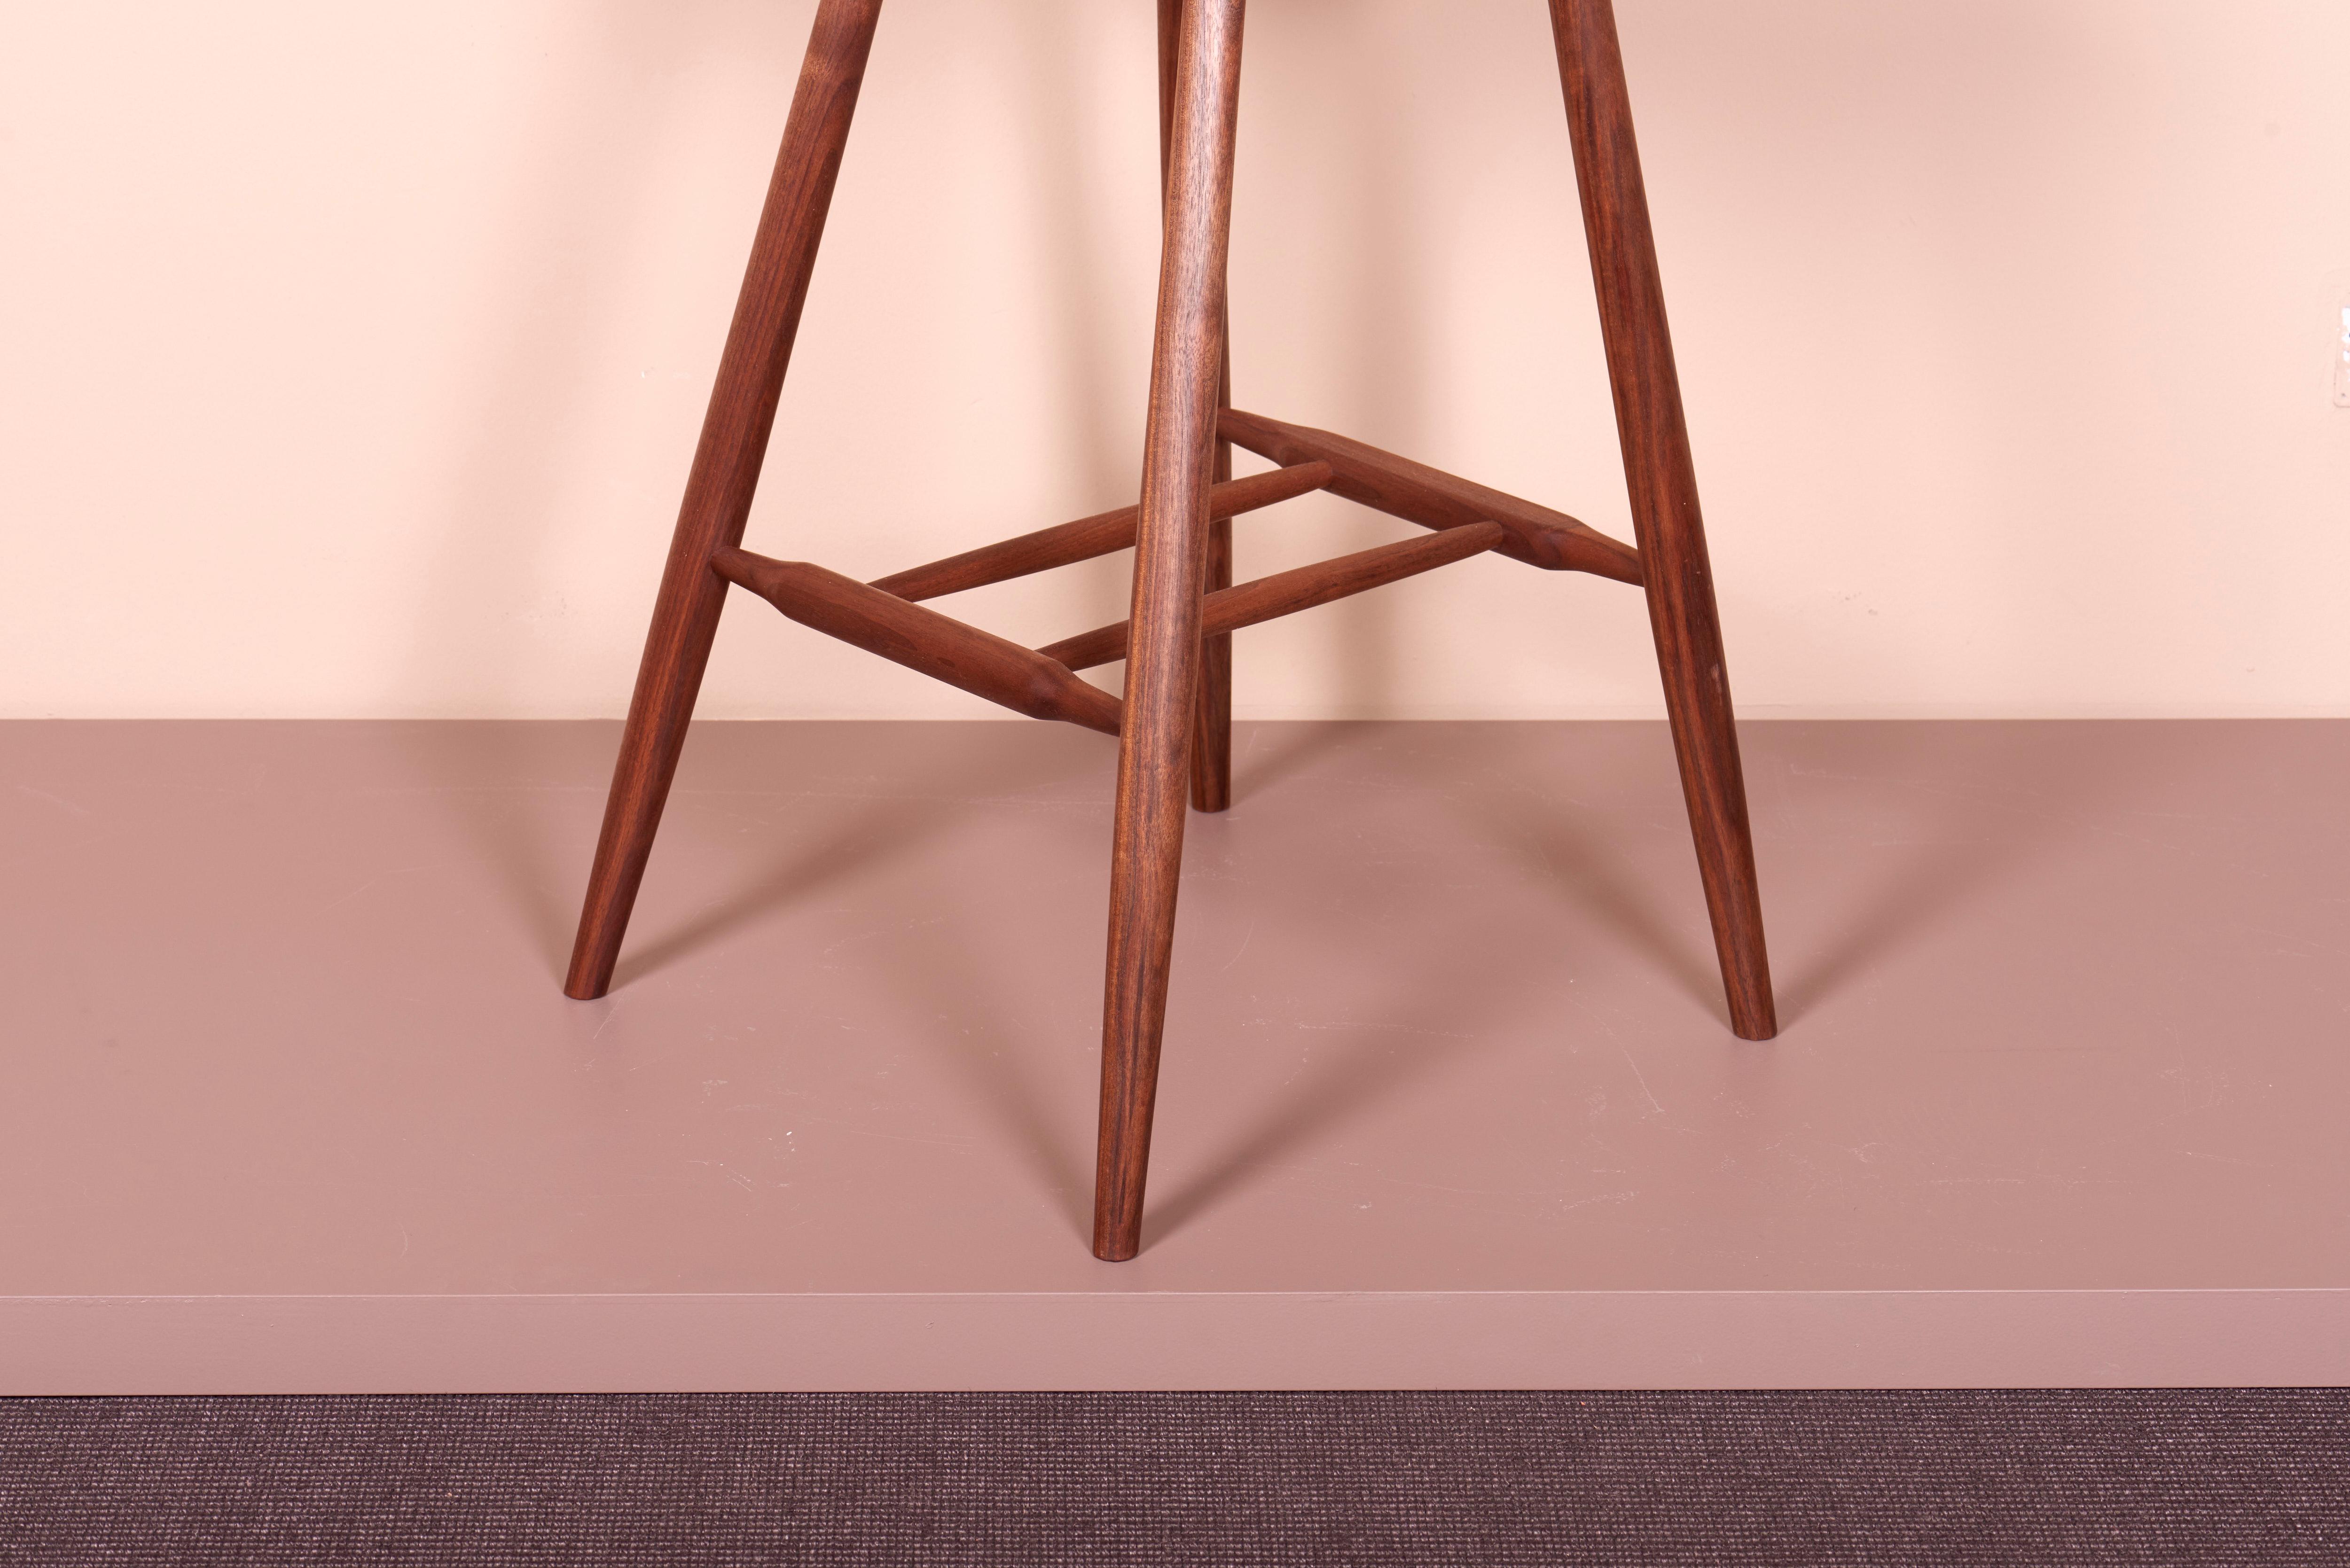 Four Mira Nakashima 4-Legged High Chairs based on a design by George Nakashima For Sale 9